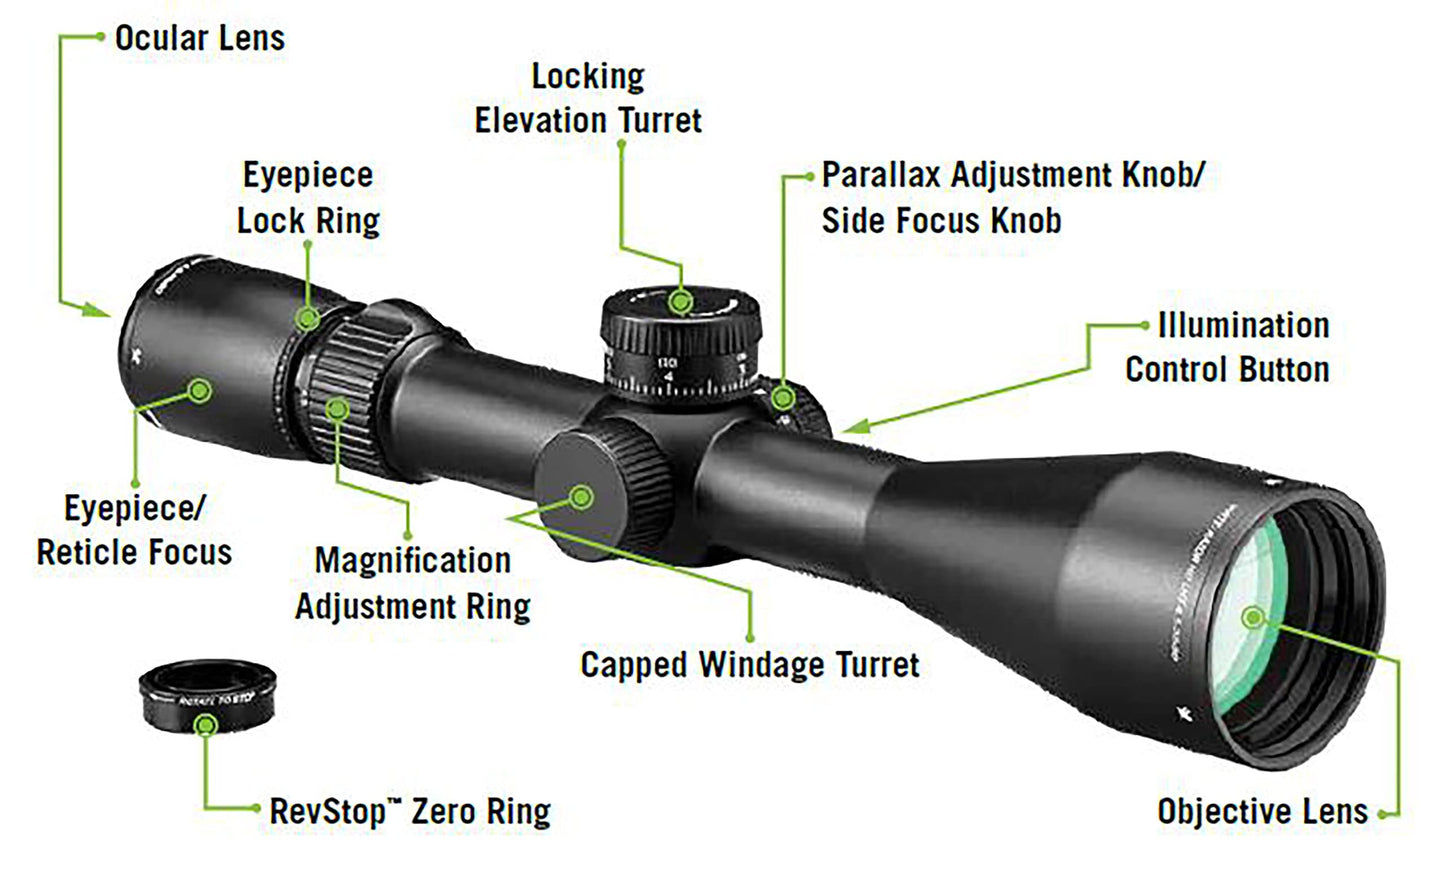 Vortex Optics Razor HD LHT 4.5-22x50 First Focal Plane Riflescope - RZR-42202